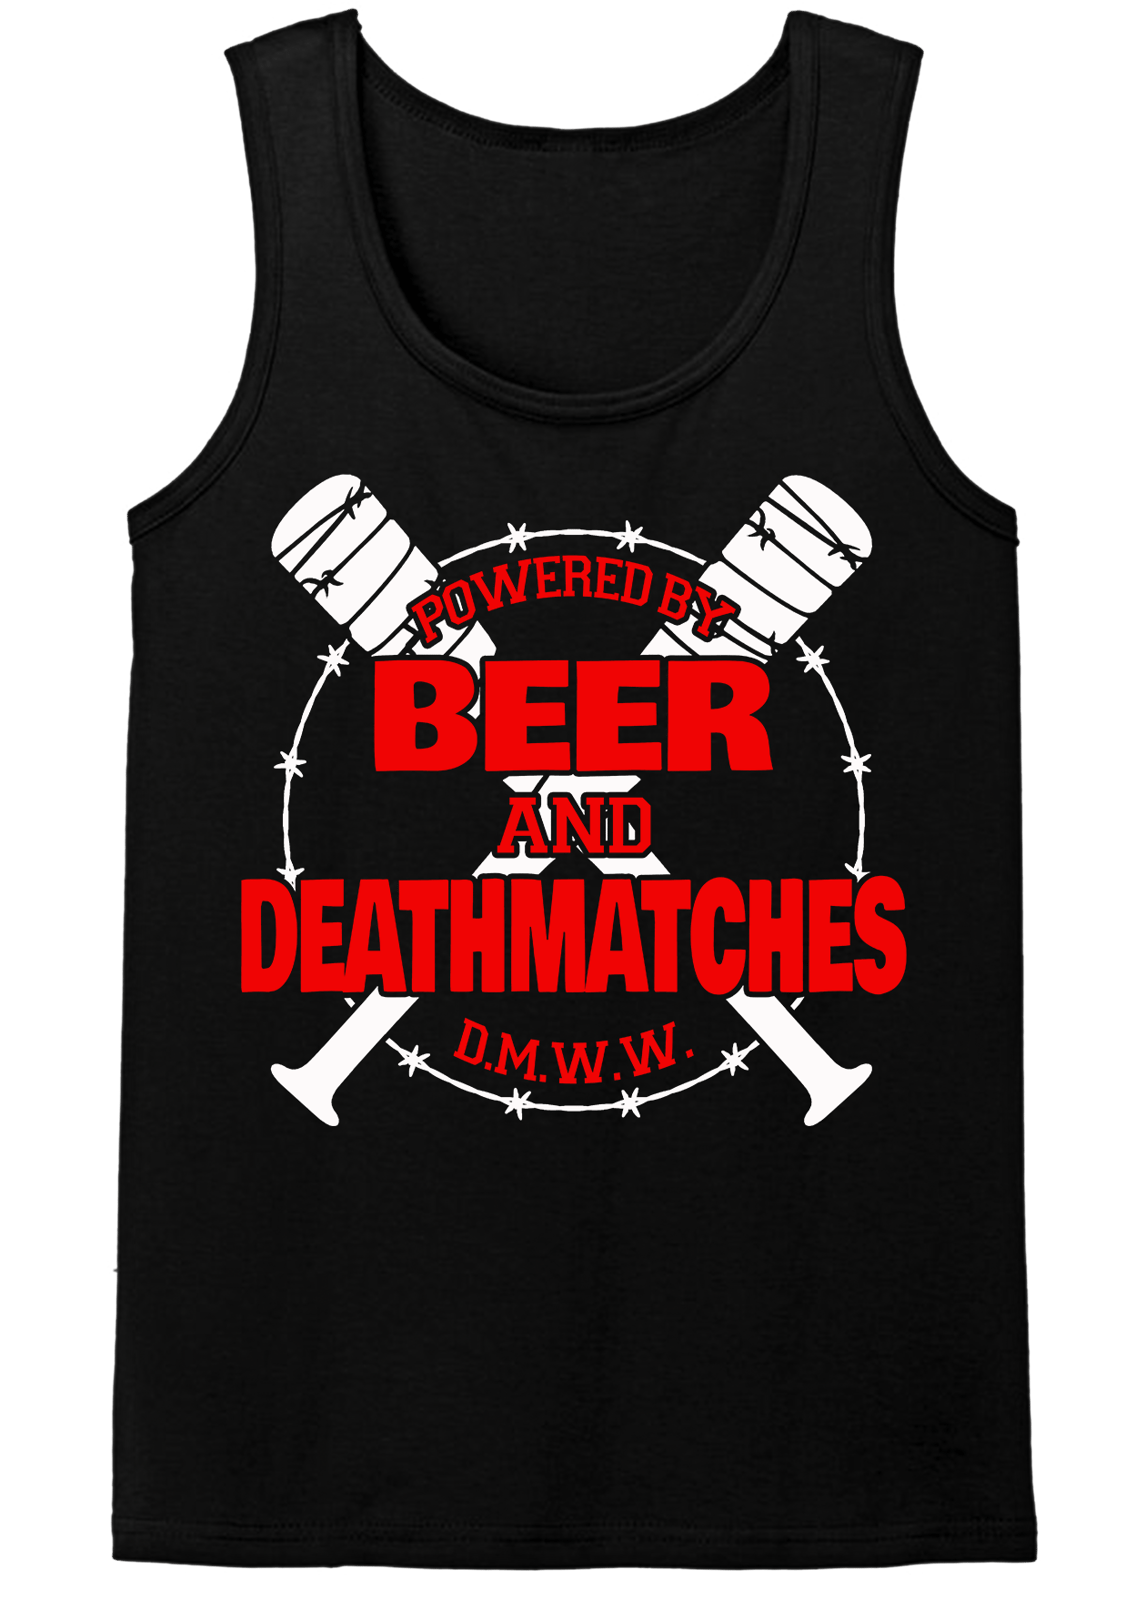 DEATHMATCH WORLDWIDE BRAND | Deathmatch Worldwide